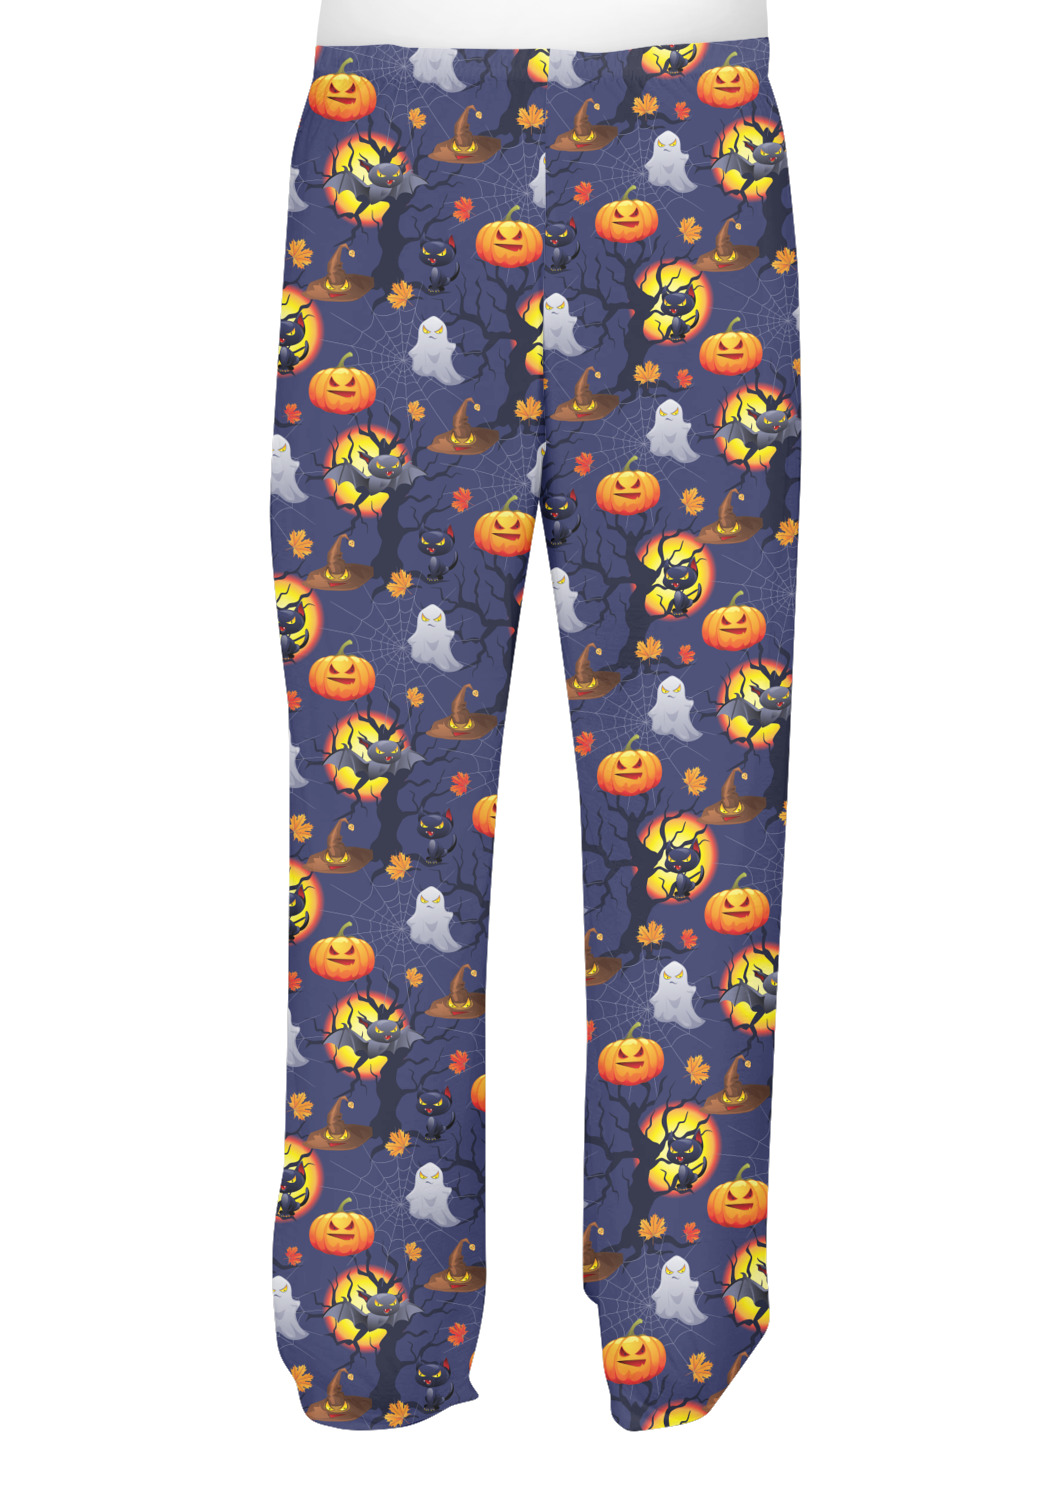 Halloween Night Mens Pajama Pants - XL (Personalized) - YouCustomizeIt